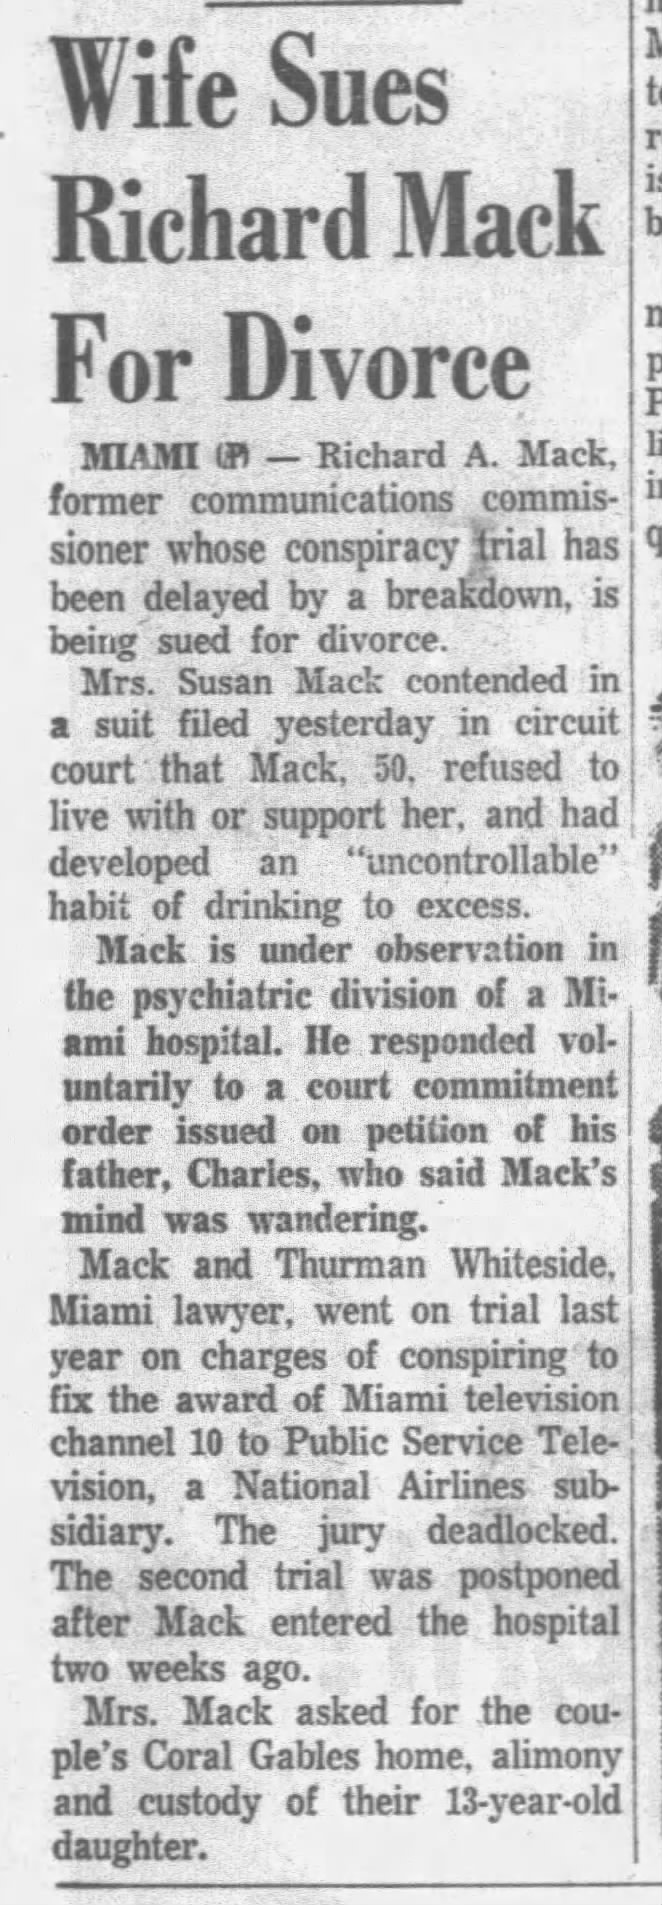 Wife Sues Richard Mack For Divorce